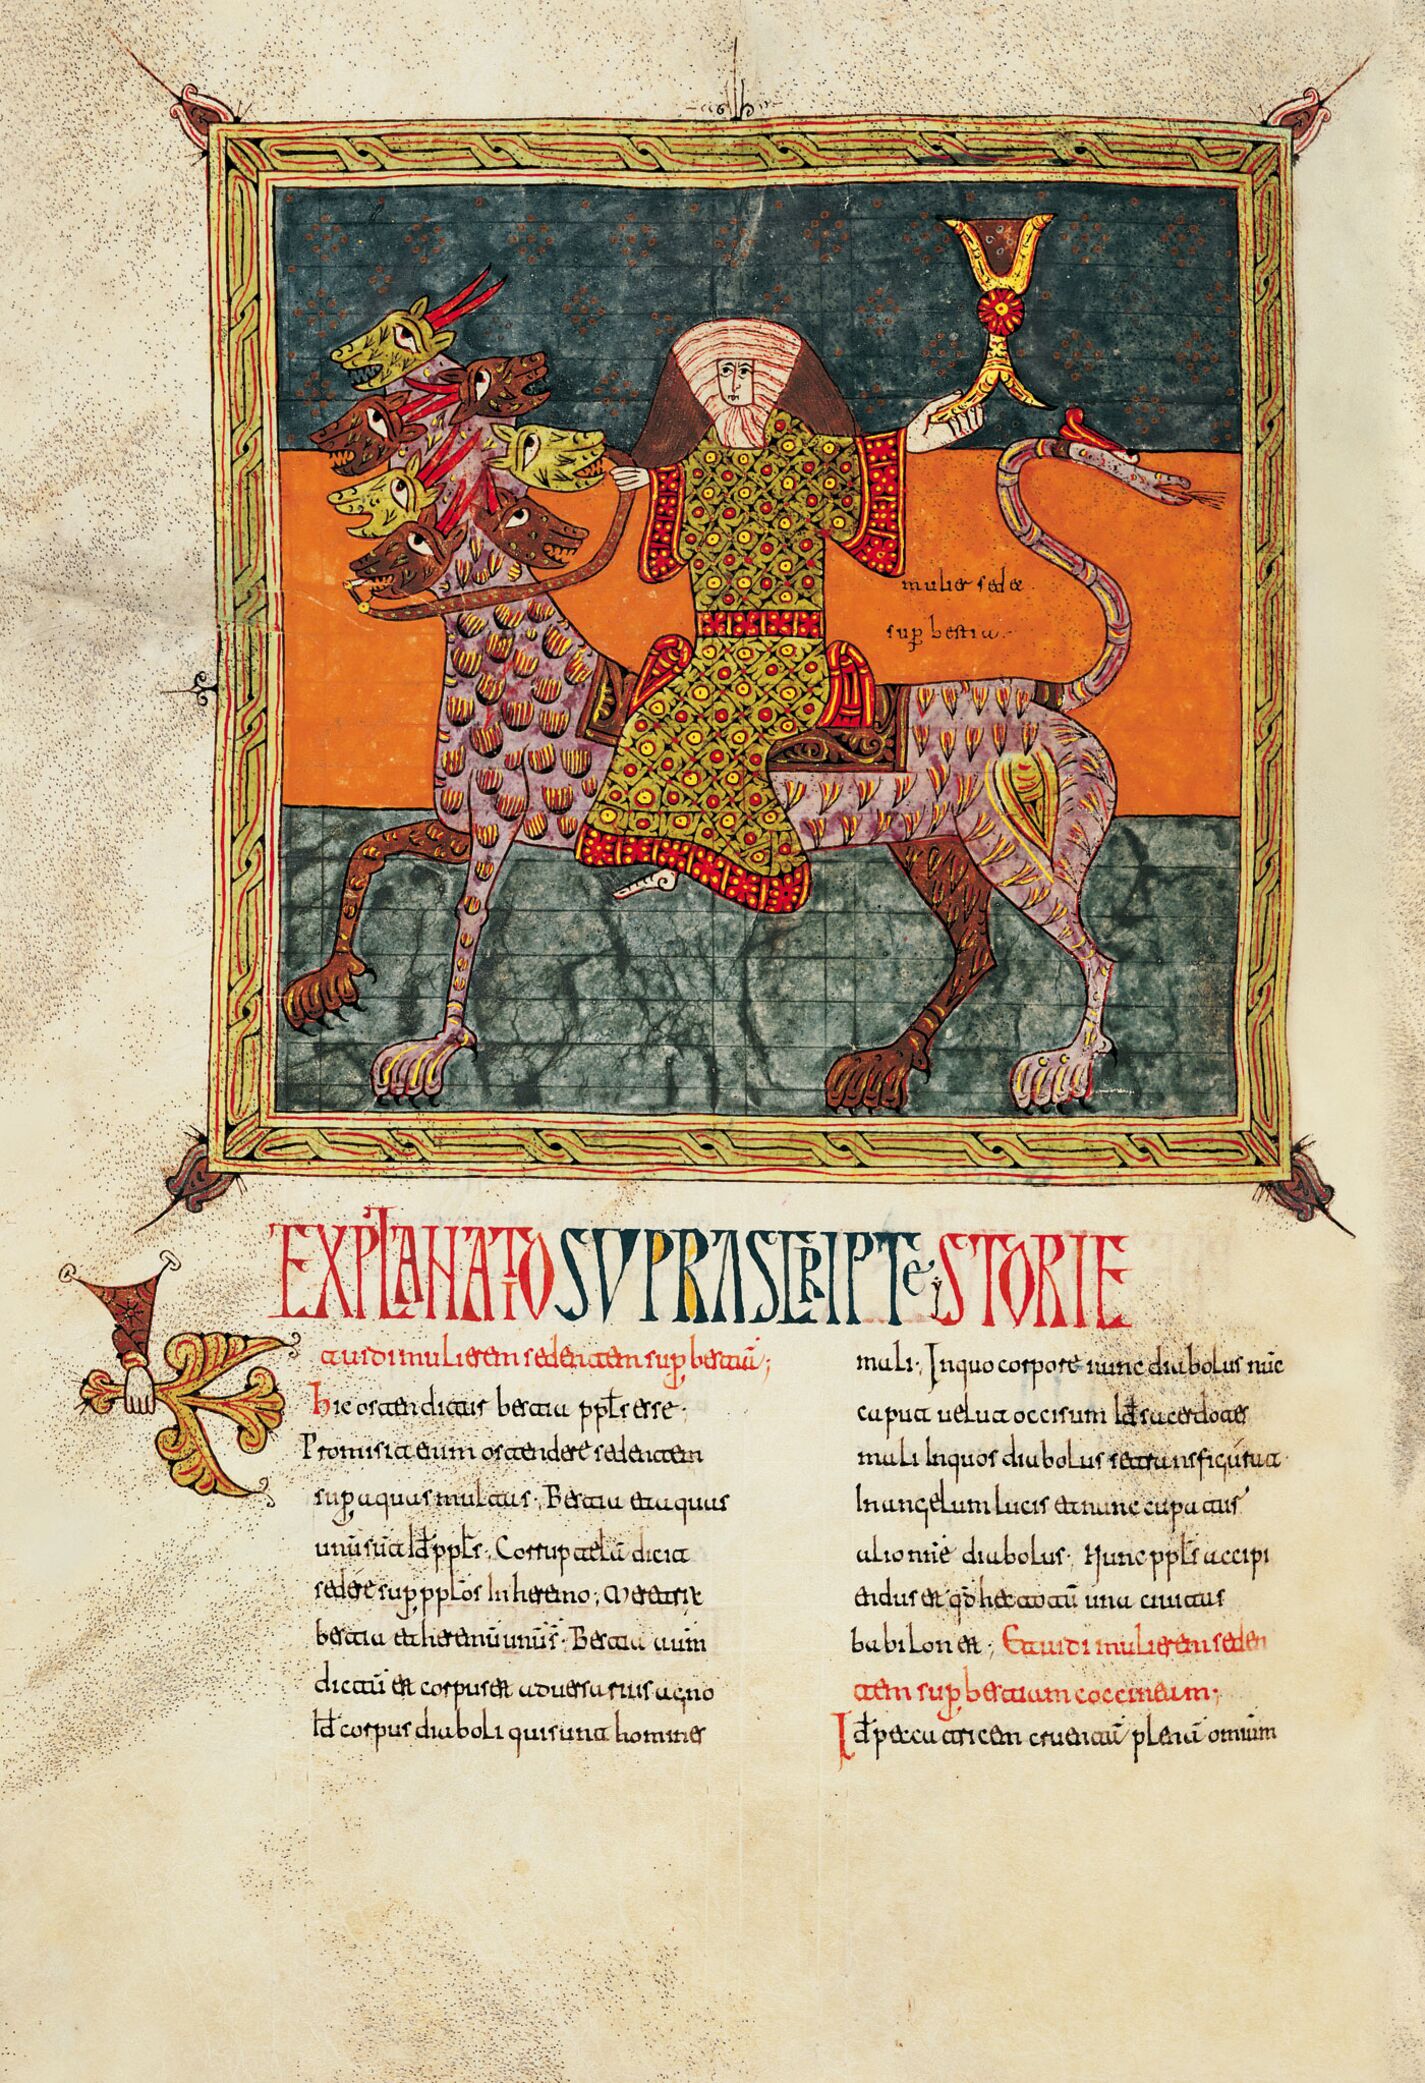 f. 183v, La mujer sobre la bestia de siete cabezas